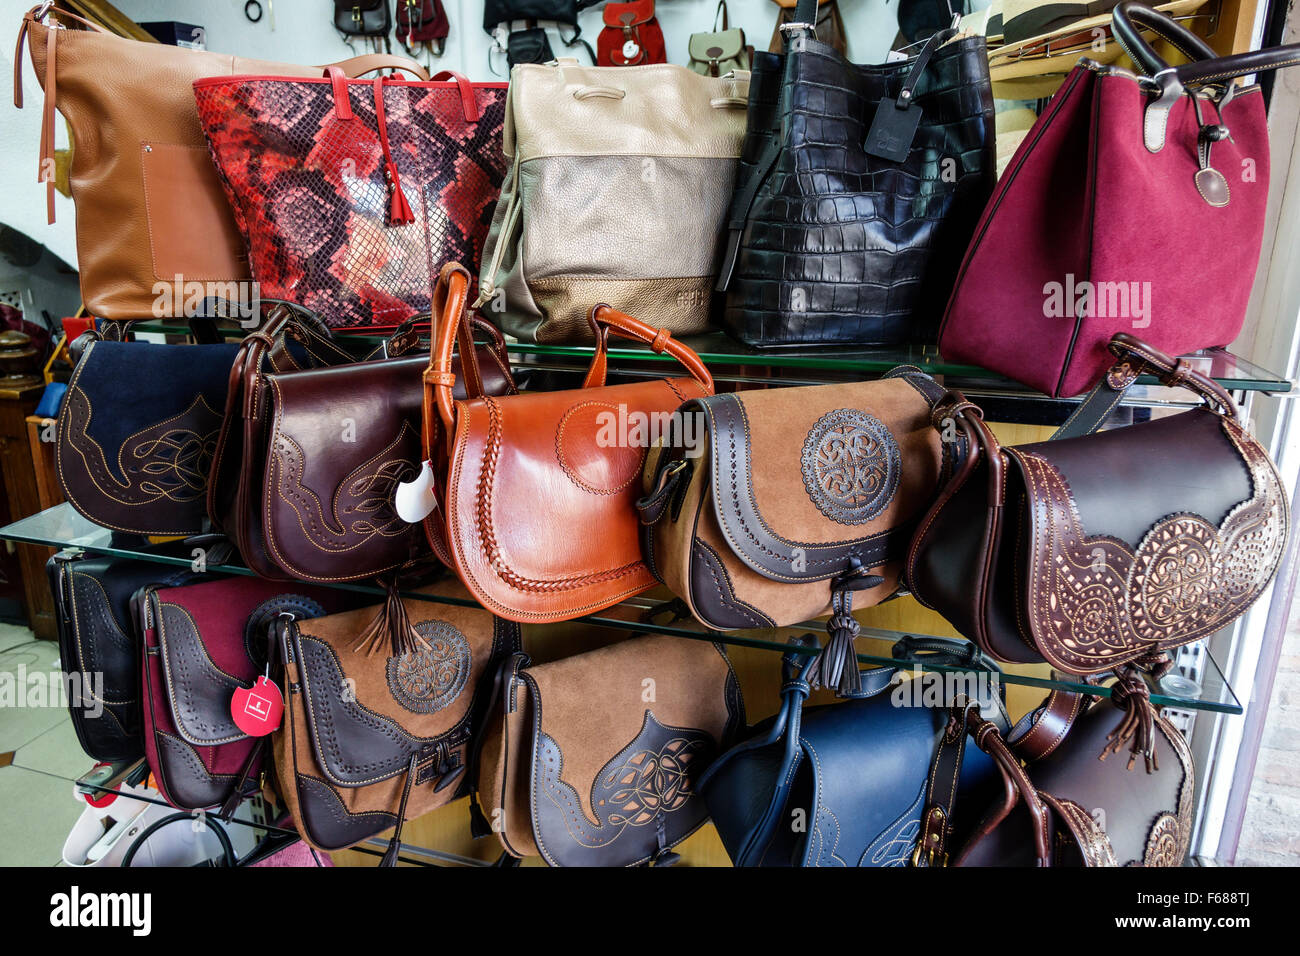 Toledo Spain,Europe,Spanish,Hispanic artisanal leather handbag purse pocketbooks,women's,shopping shopper shoppers shop shops market markets marketpla Stock Photo